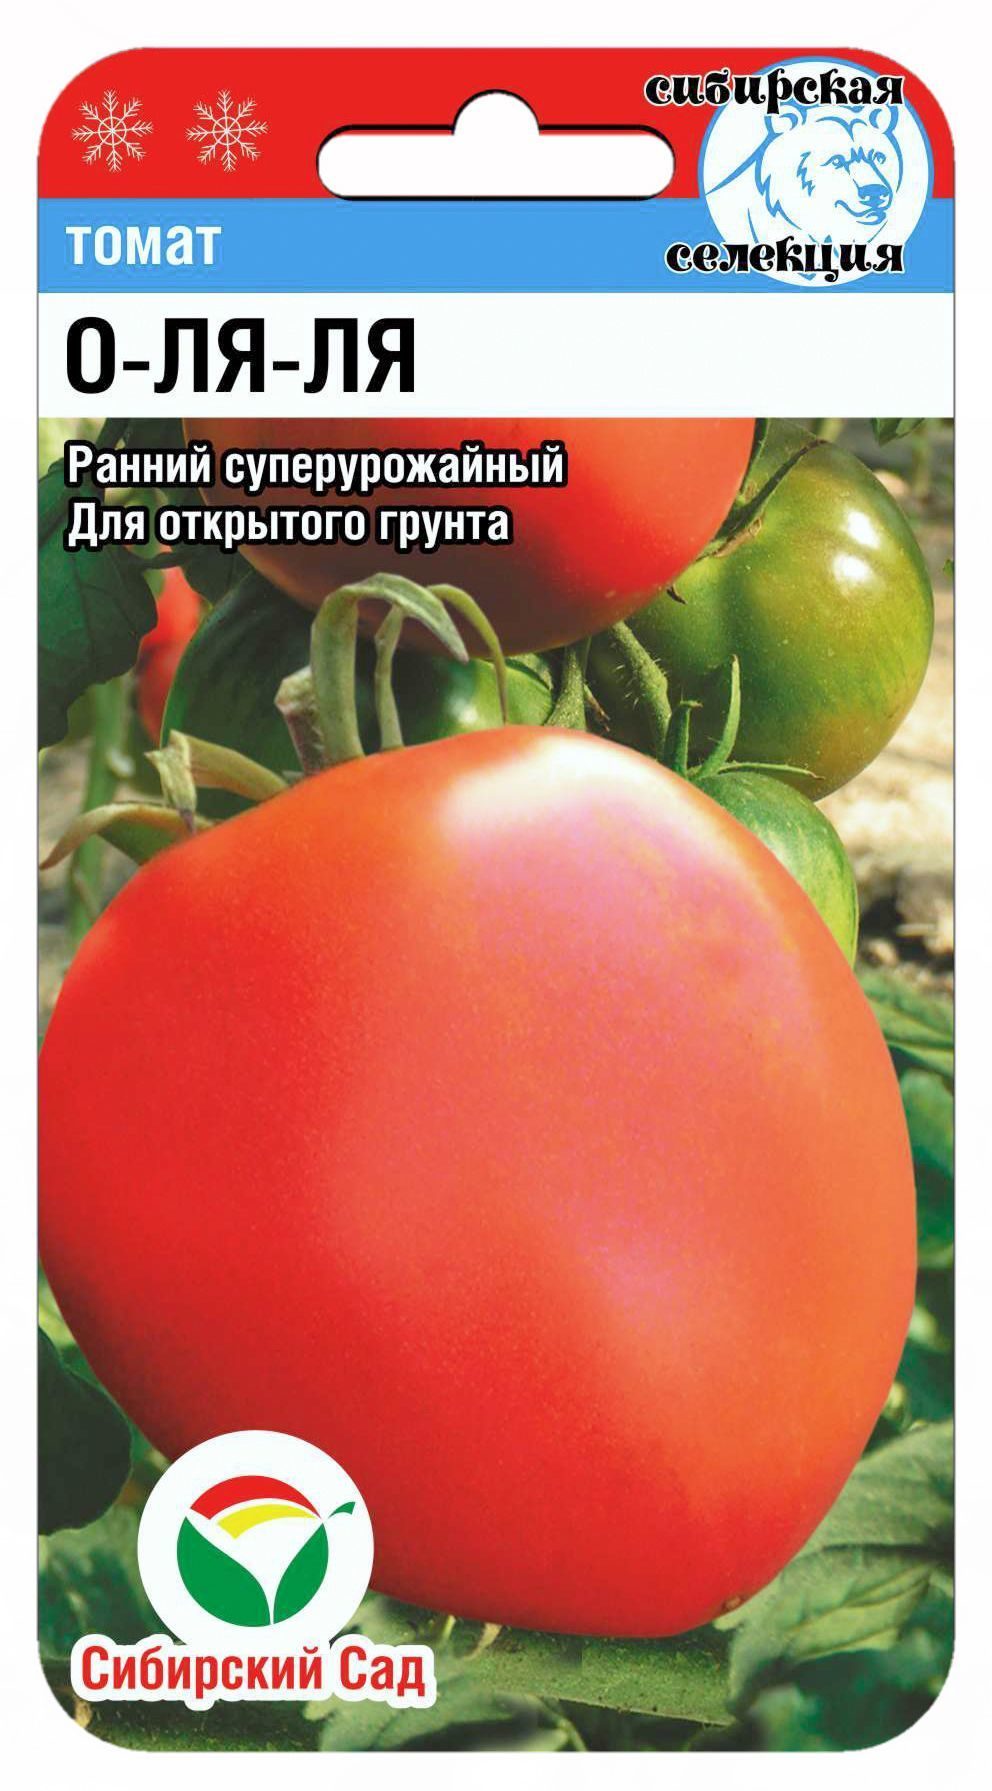 Томат оля: описание, отзывы, фото, характеристика | tomatland.ru